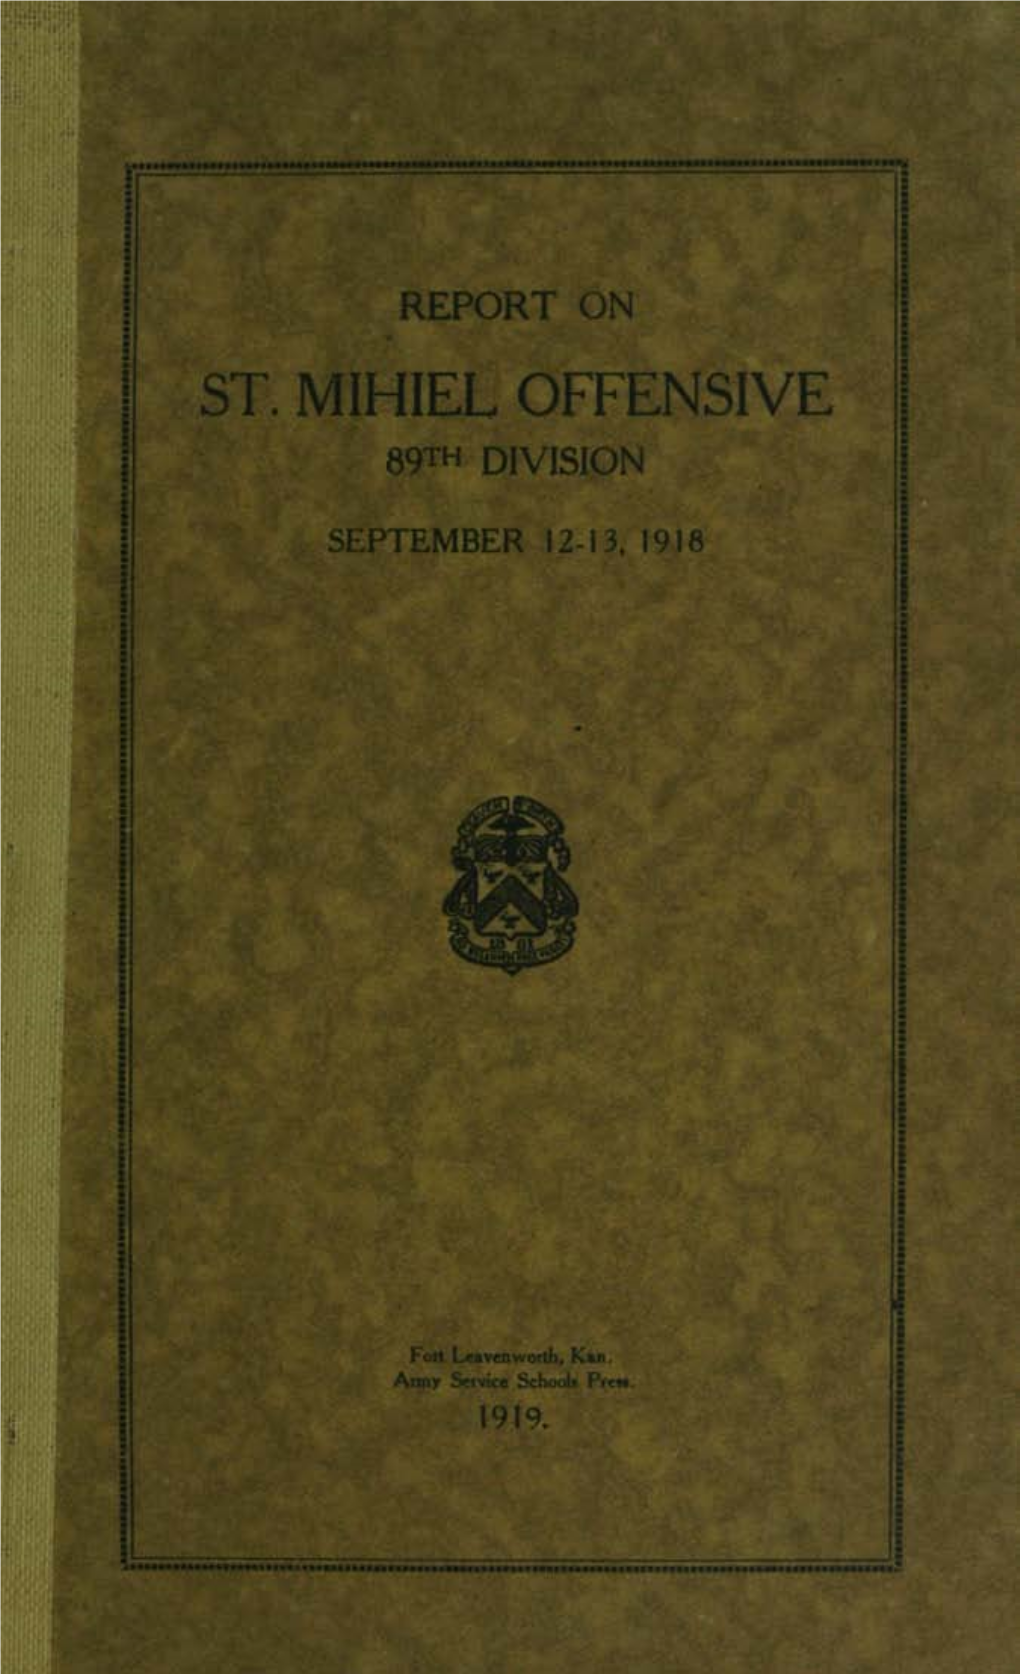 St. Mihiel Offensive